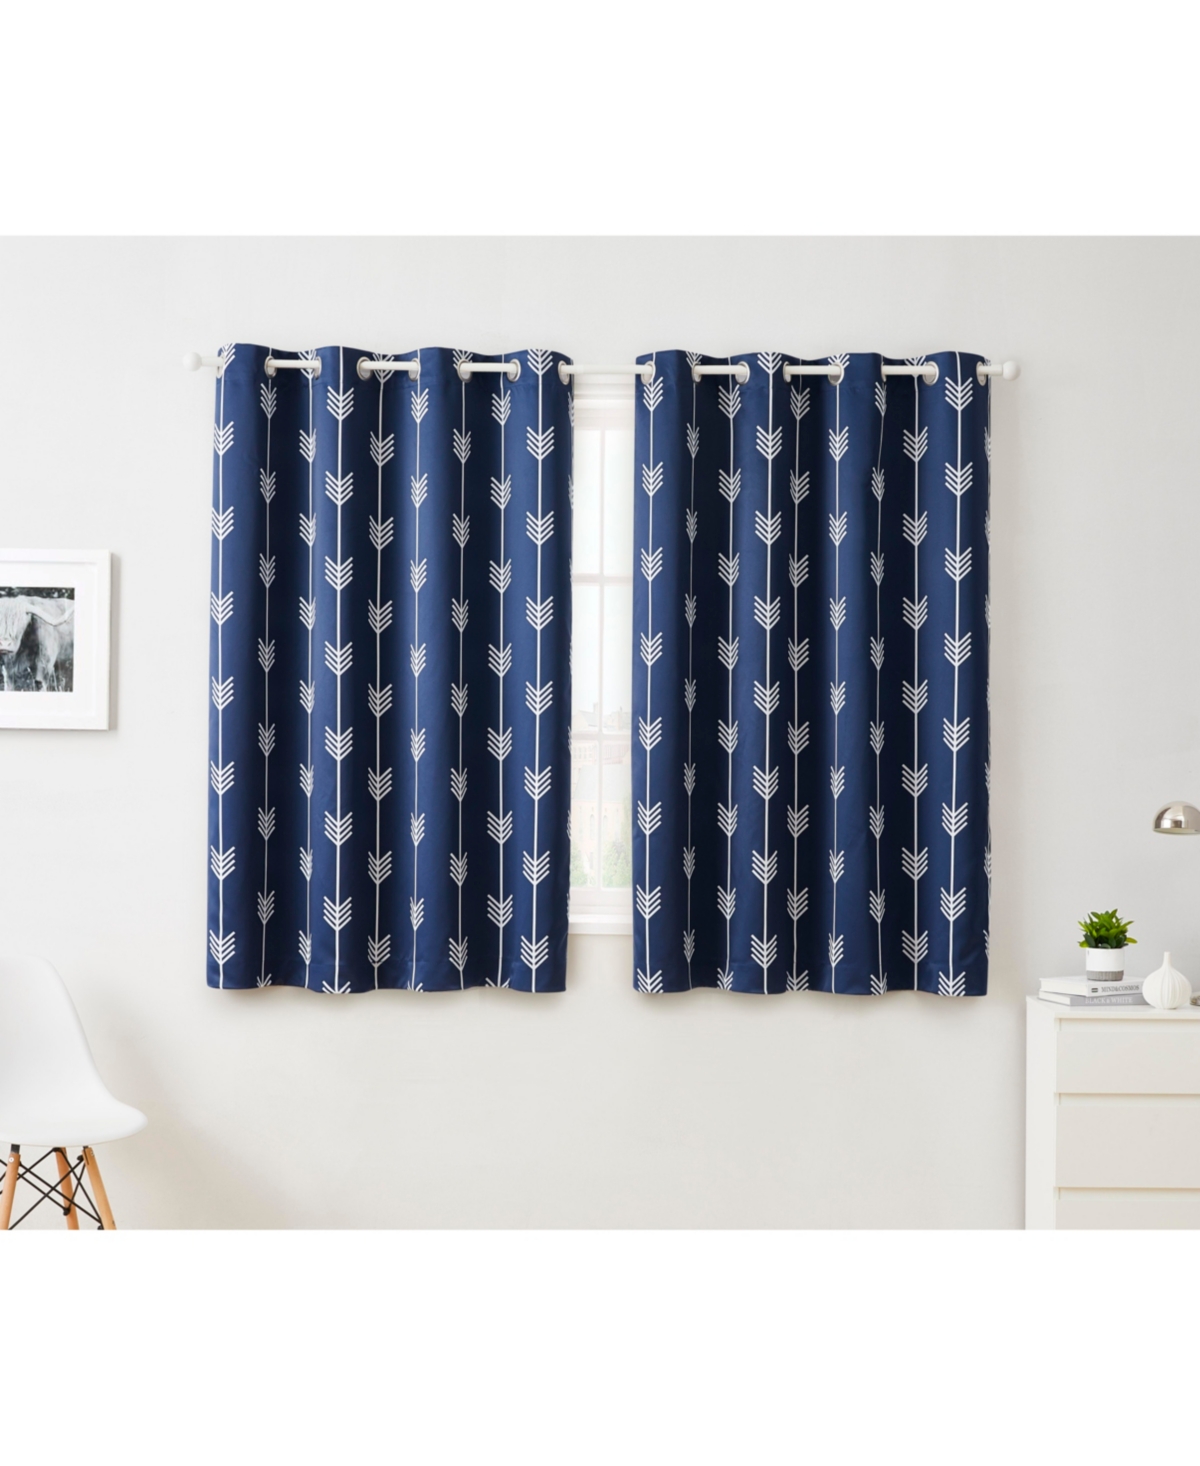 Arrow Printed Privacy Blackout Energy Efficient Room Darkening Thermal Grommet Window Curtain Drape Panels for Bedroom - Set of 2 - Navy blue